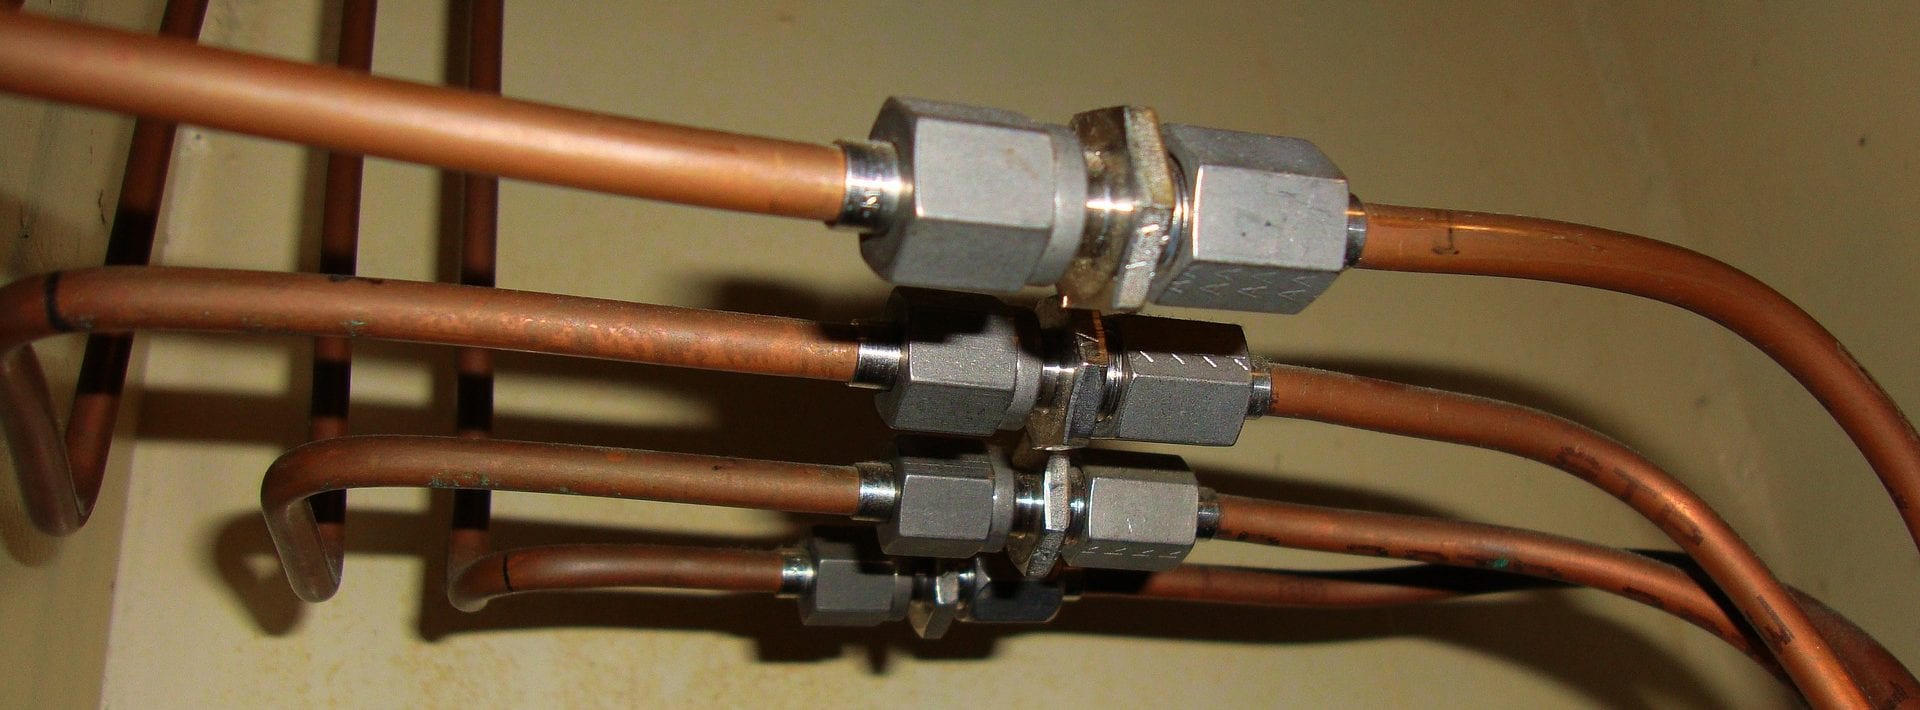 A close up of metal pipes | Akins Plumbing.